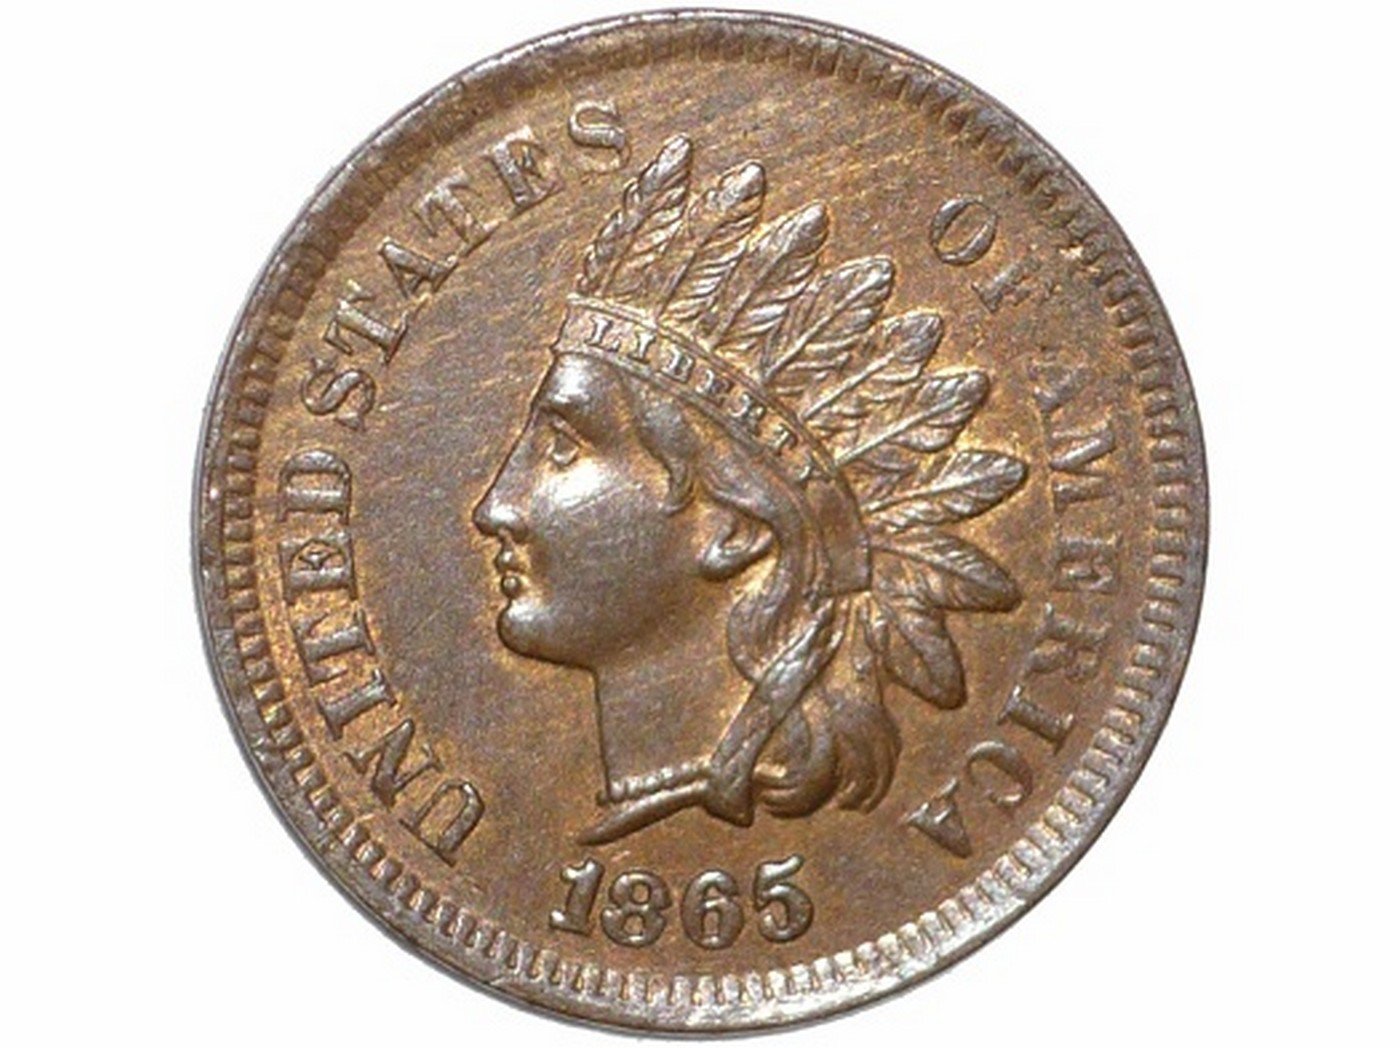 1865 Plain 5 RPD-011 - Indian Head Penny - Photo by David Poliquin